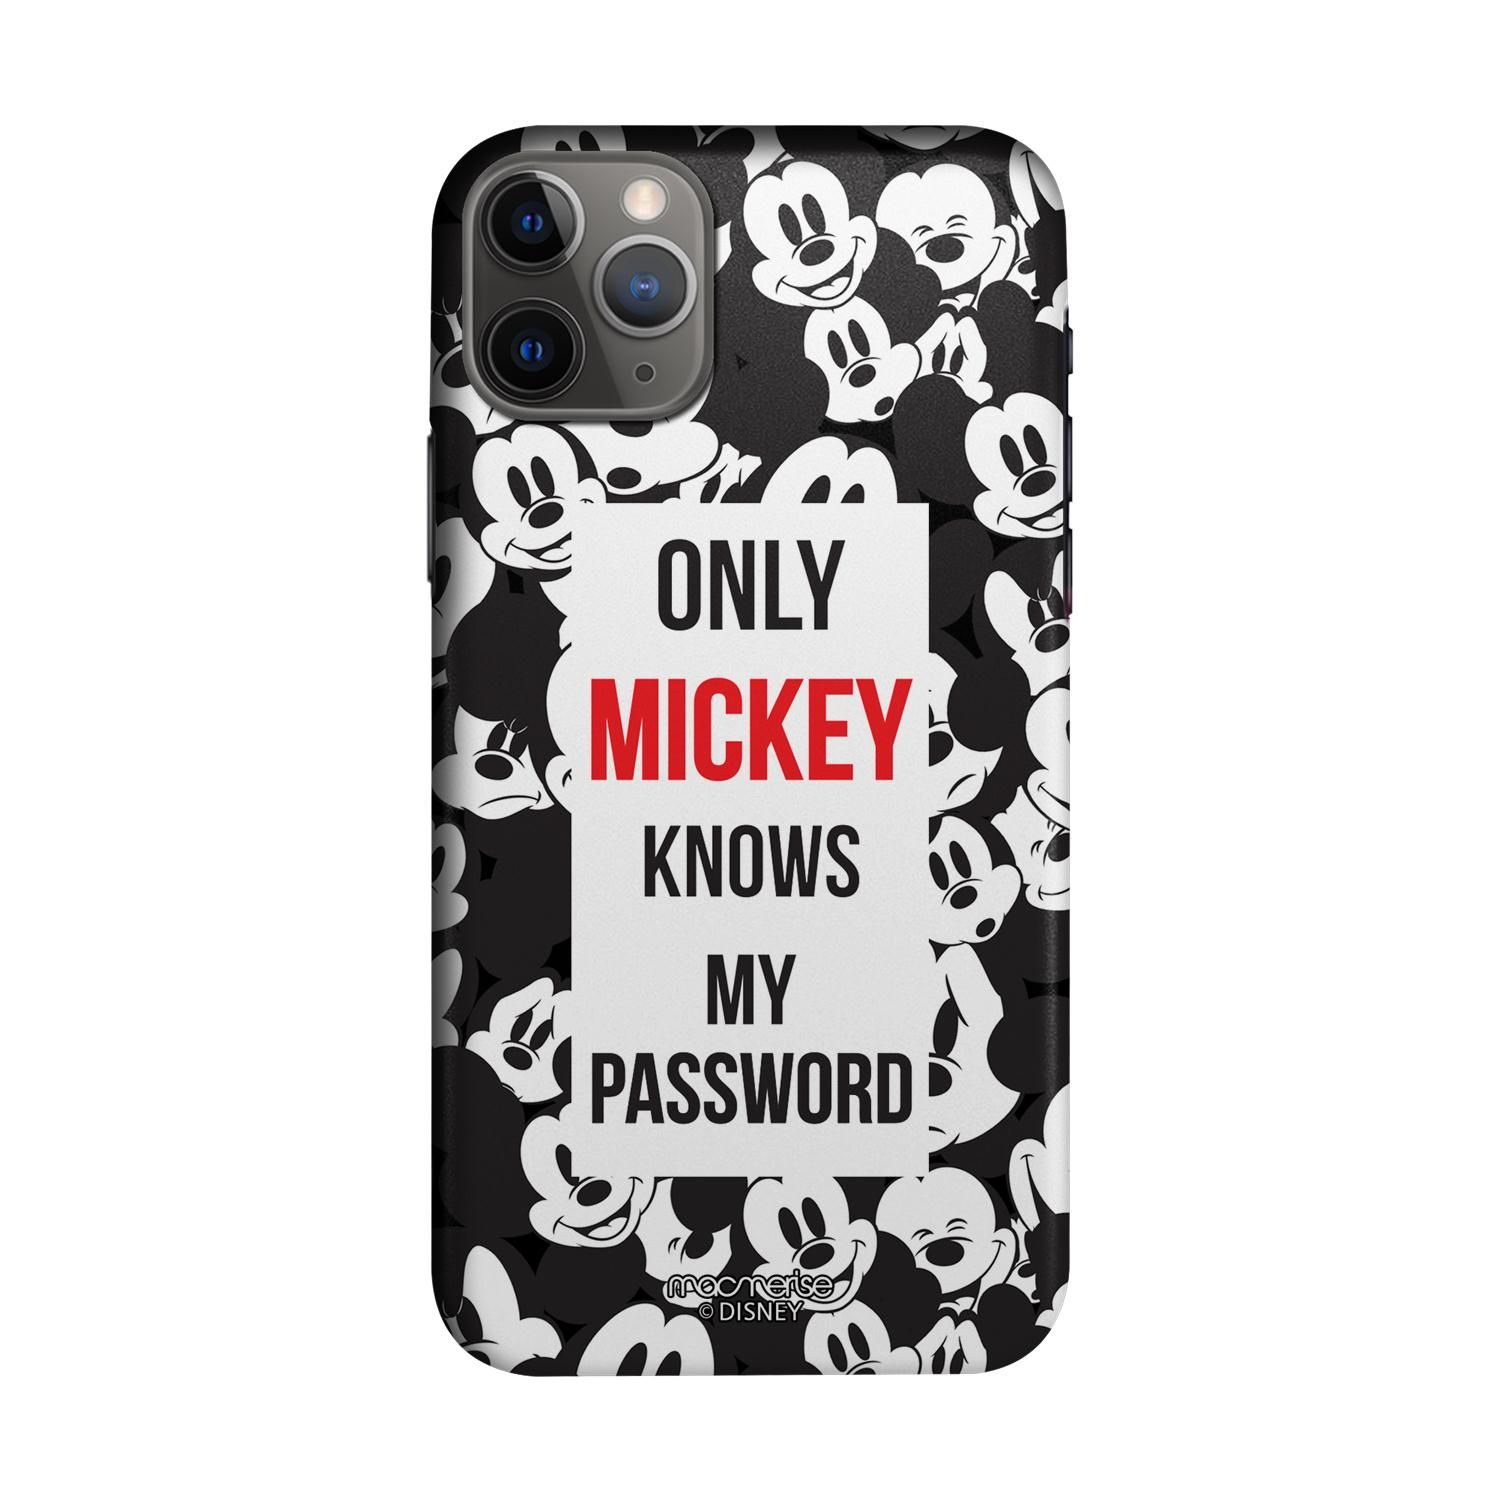 Buy Mickey my Password - Sleek Phone Case for iPhone 11 Pro Online